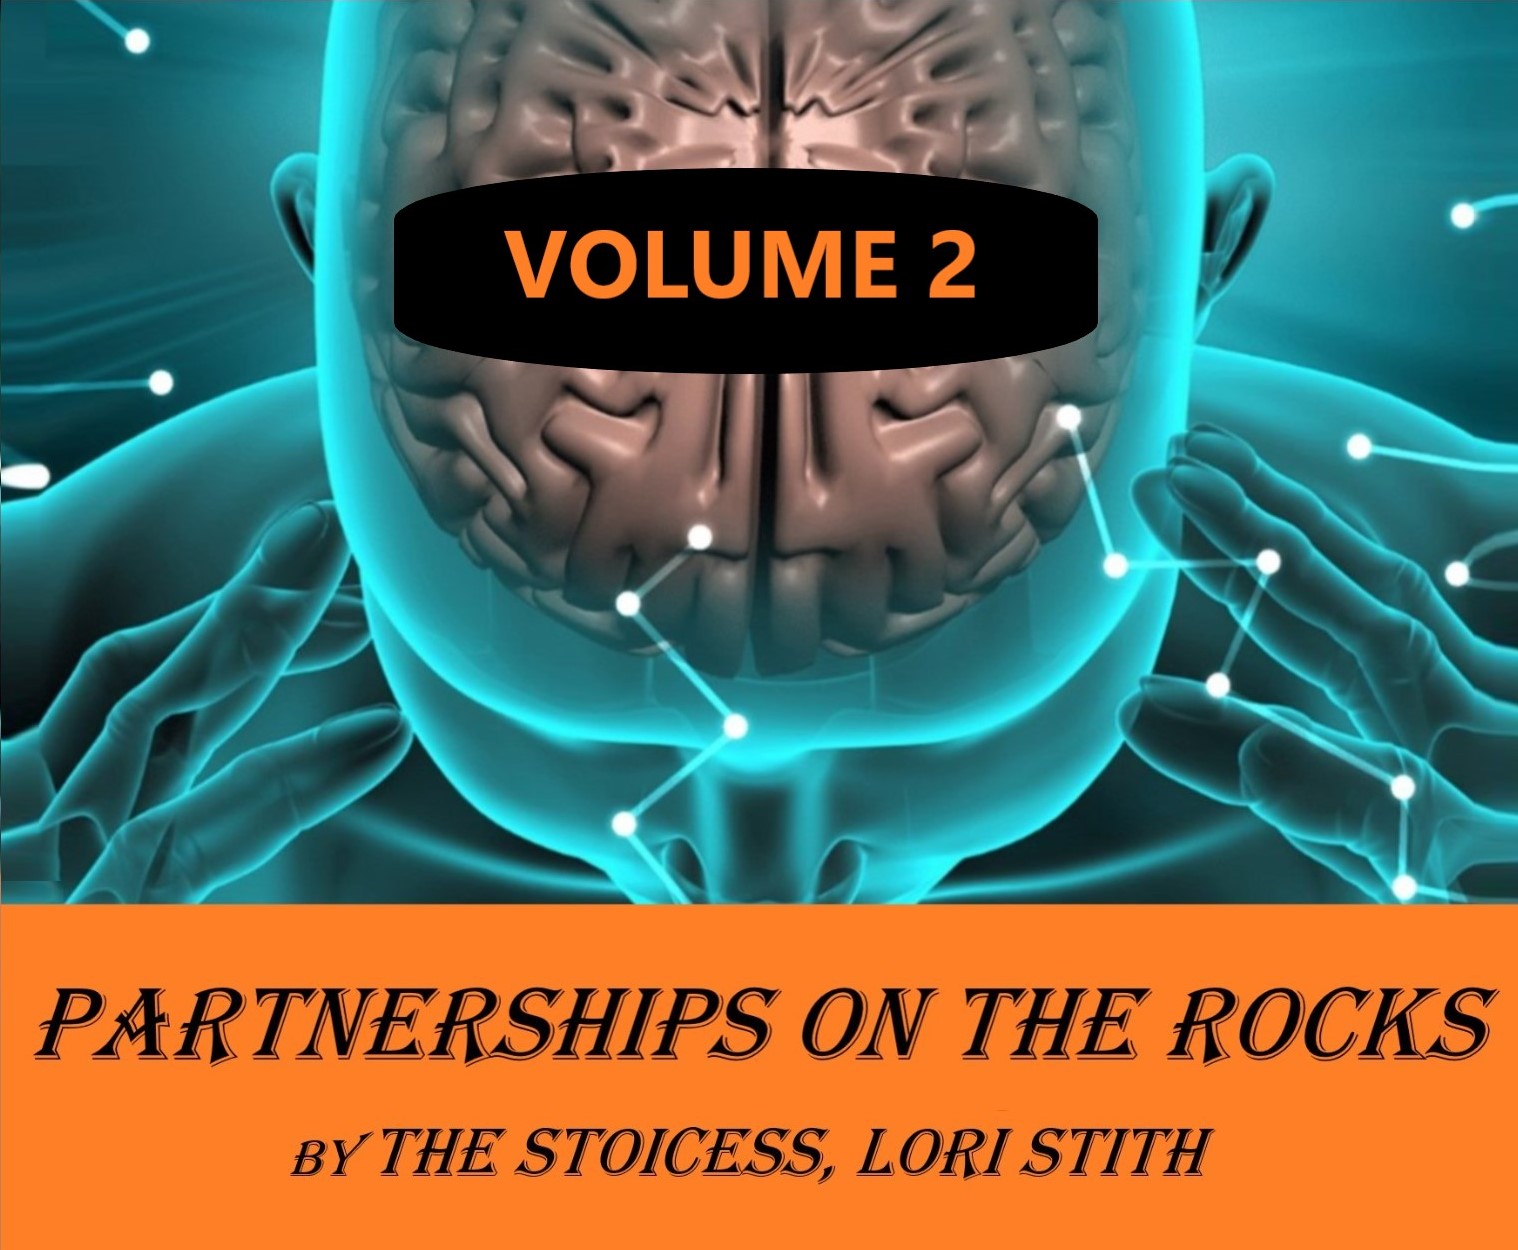 “PARTNERSHIPS ON THE ROCKS: Volume 2